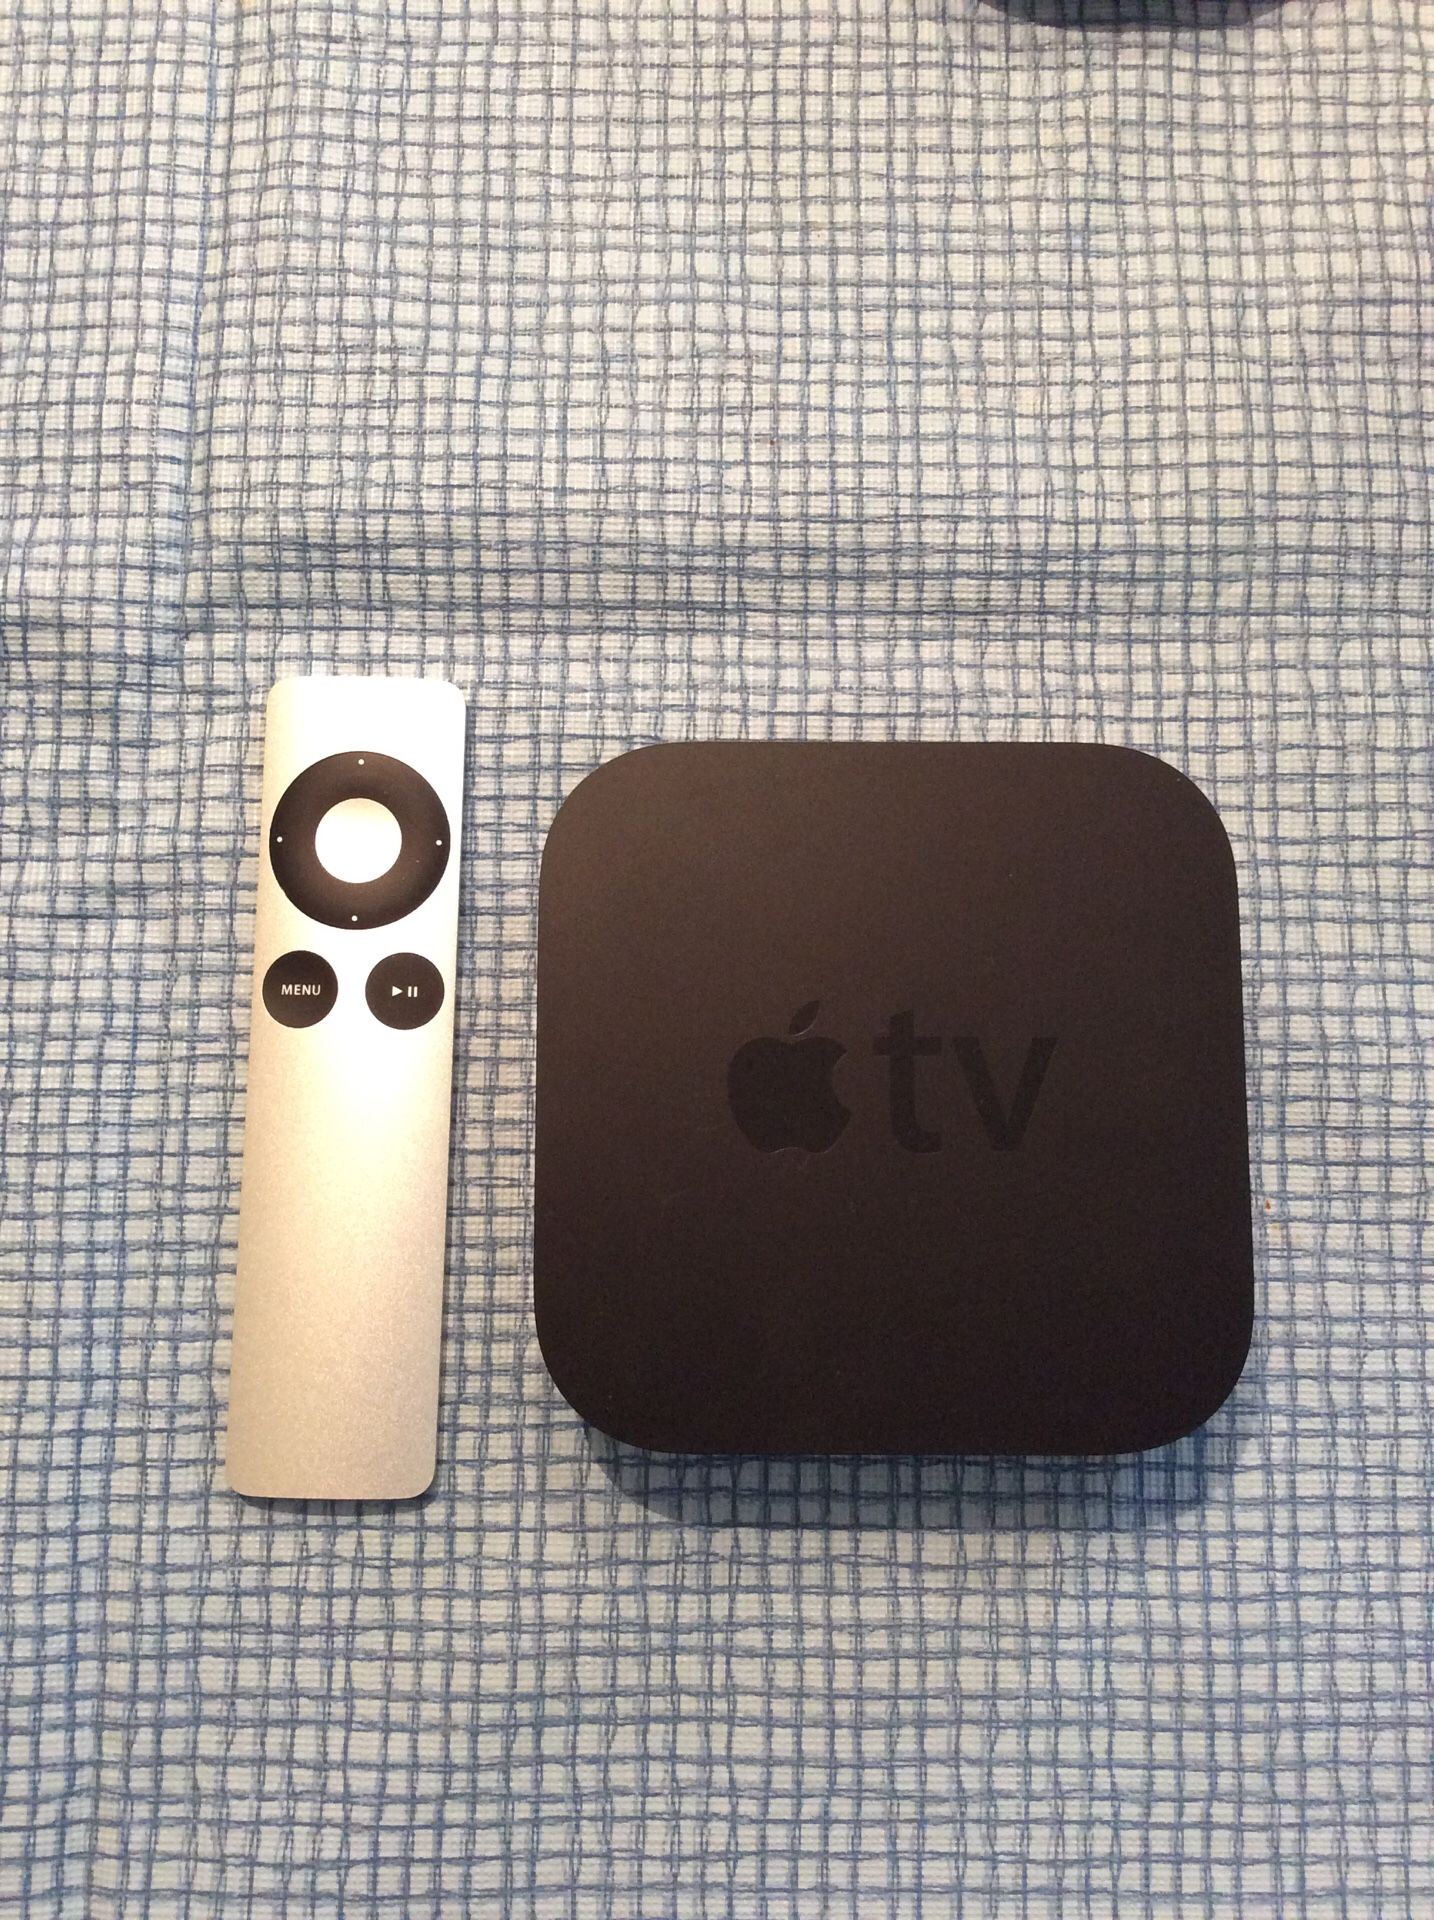 Apple TV 3rd Generation New in box